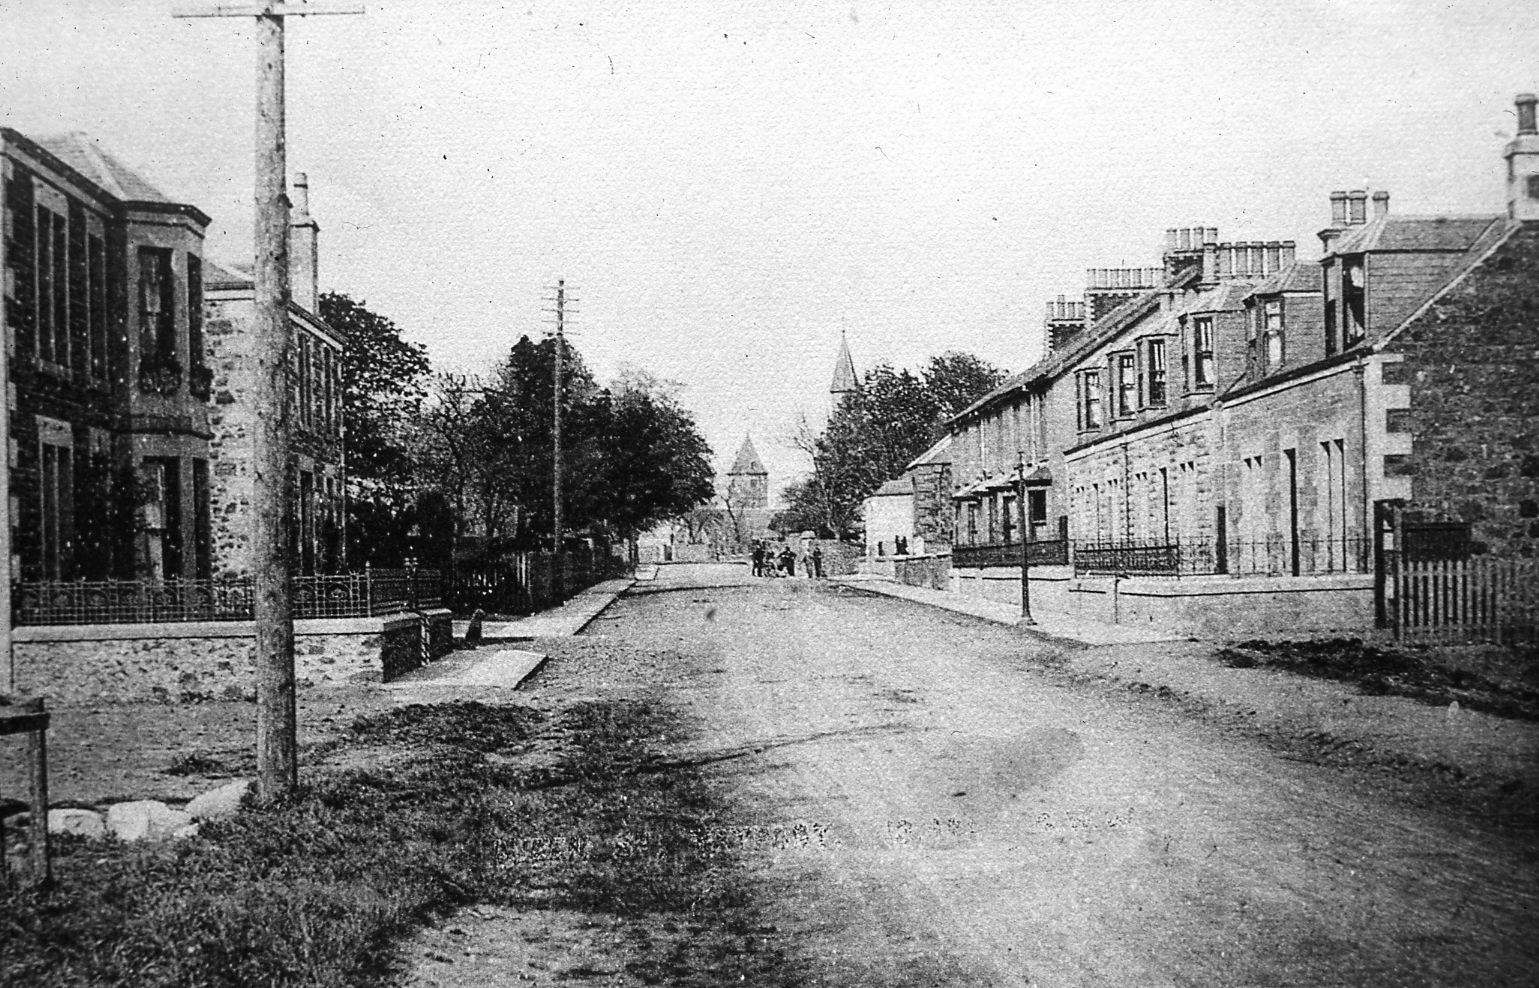 Tayport Heritage Trail - Board 10 - Queen Street early 1900s